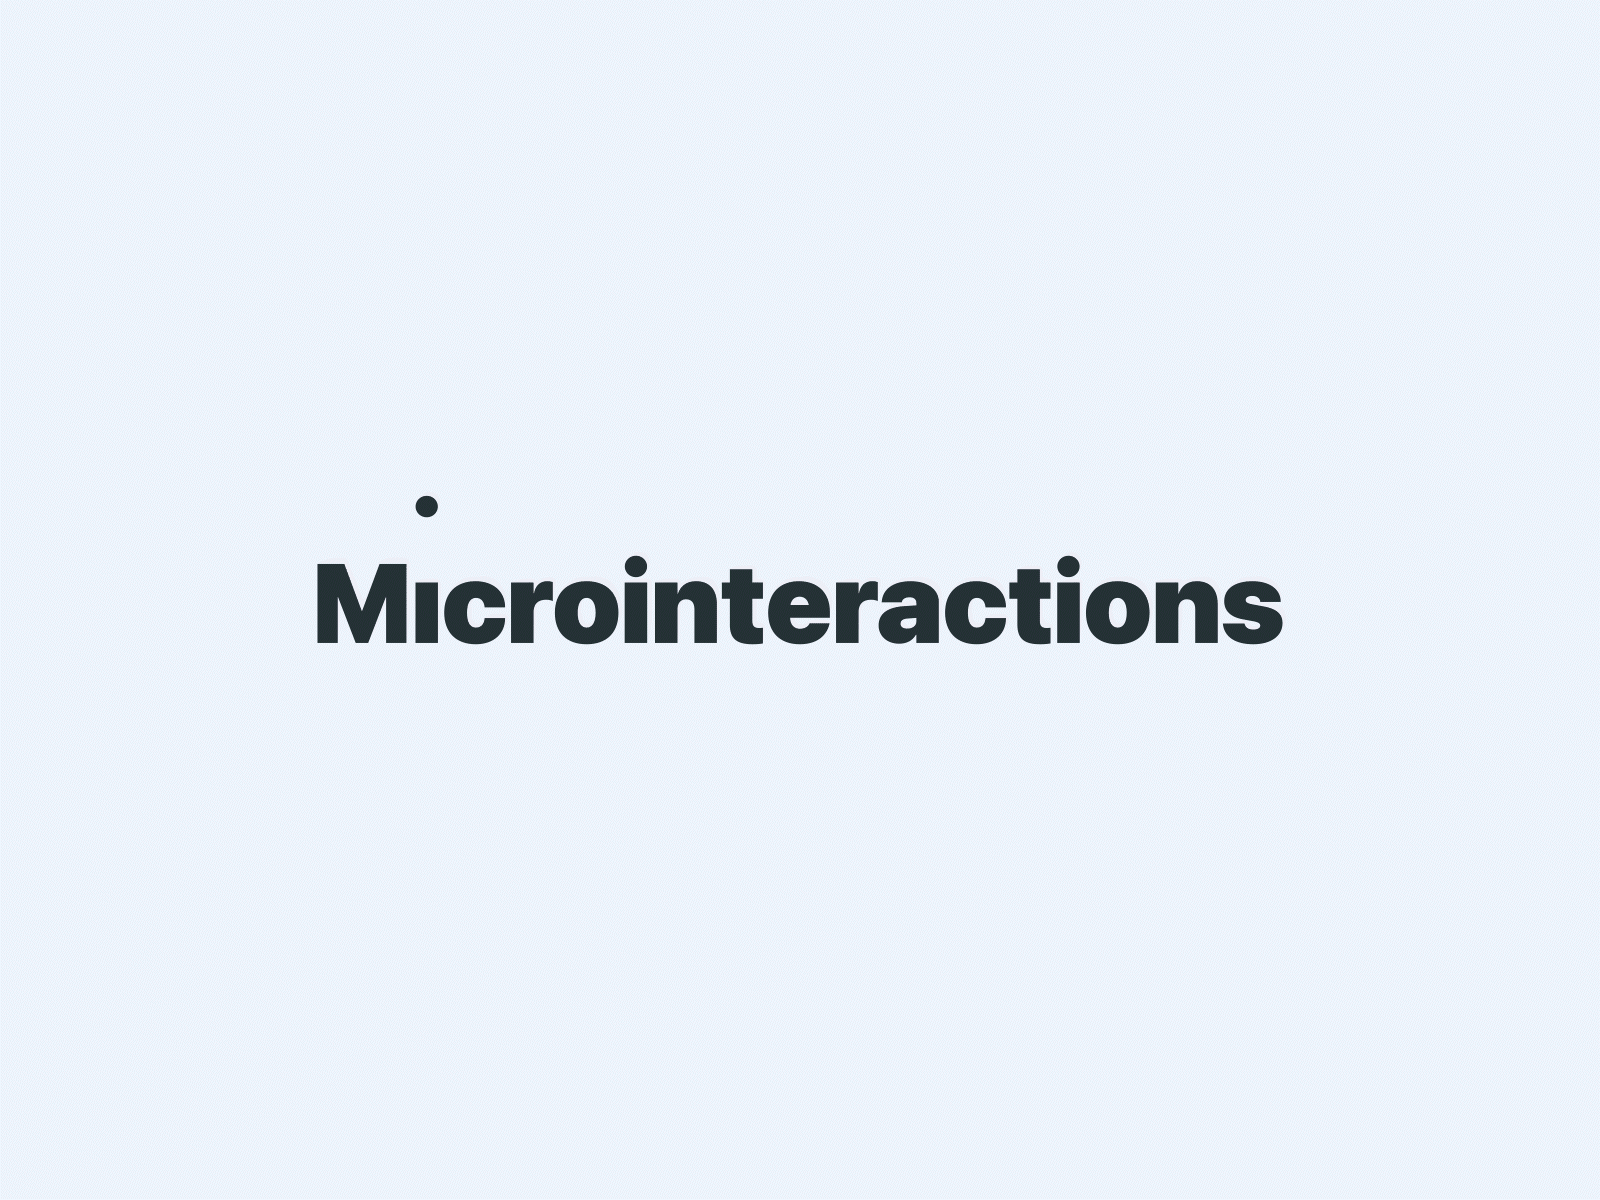 a Microinteraction